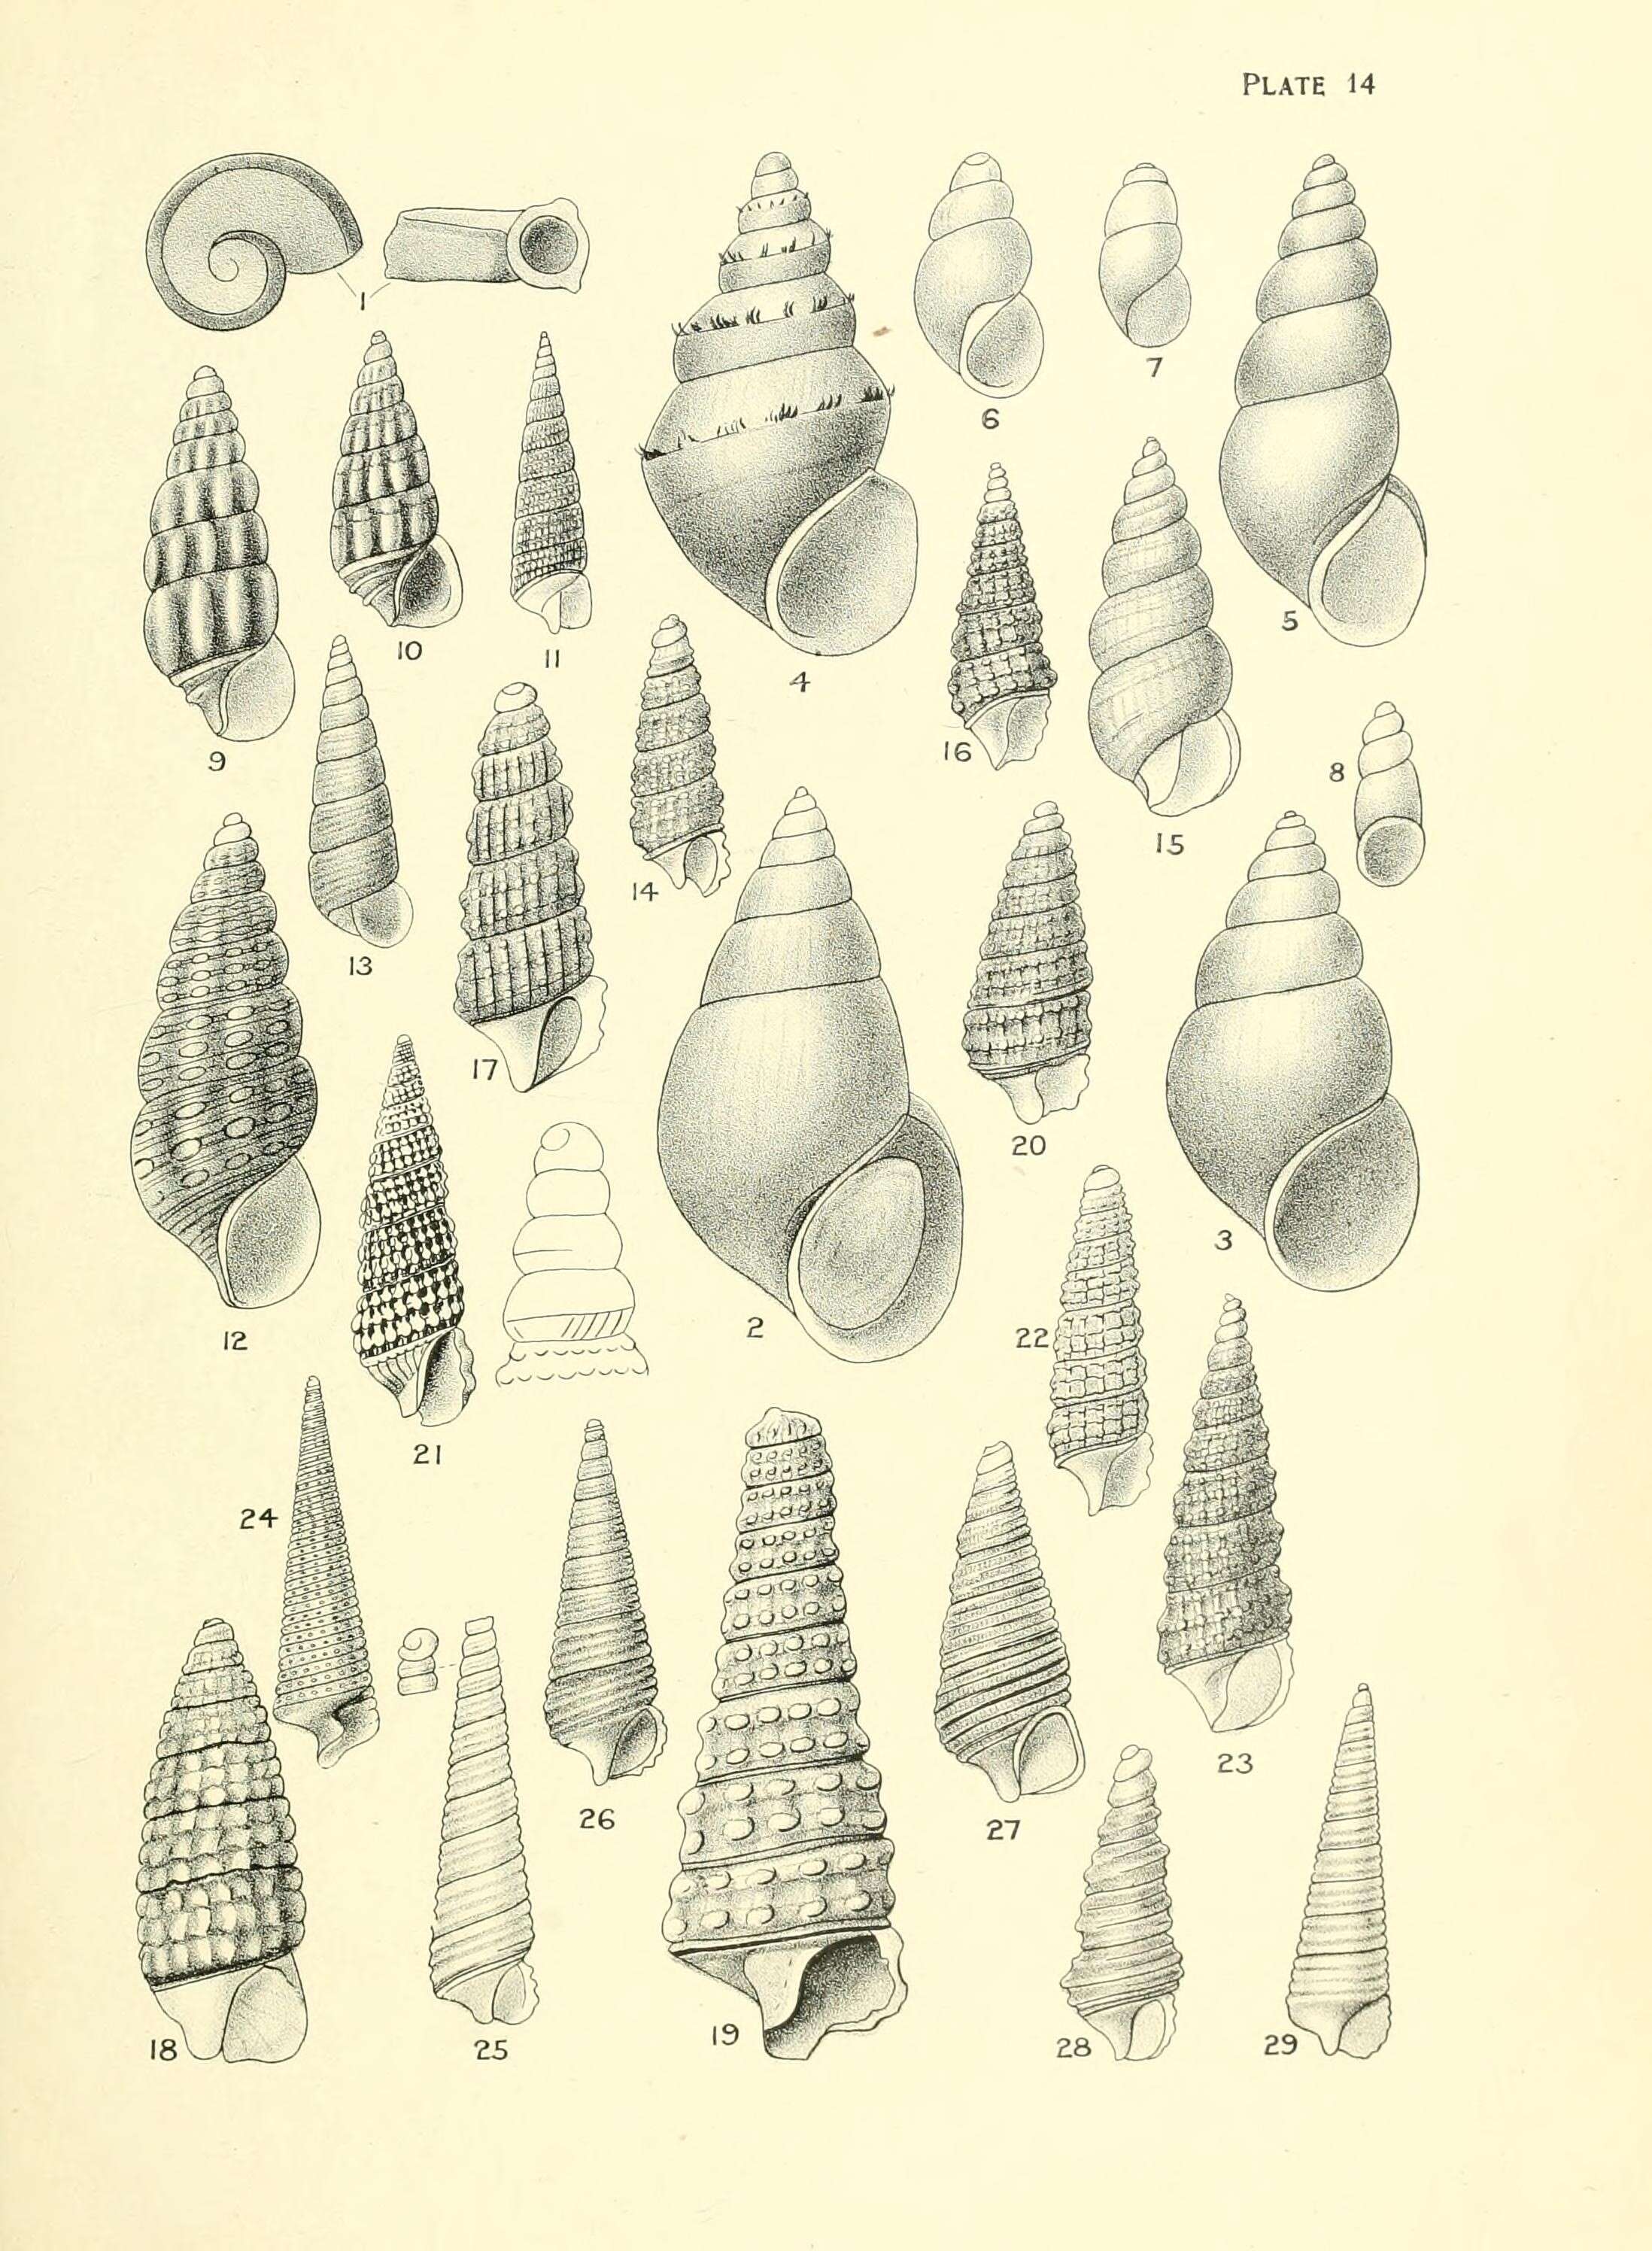 Image of Tongapyrgus subterraneus (Suter 1905)